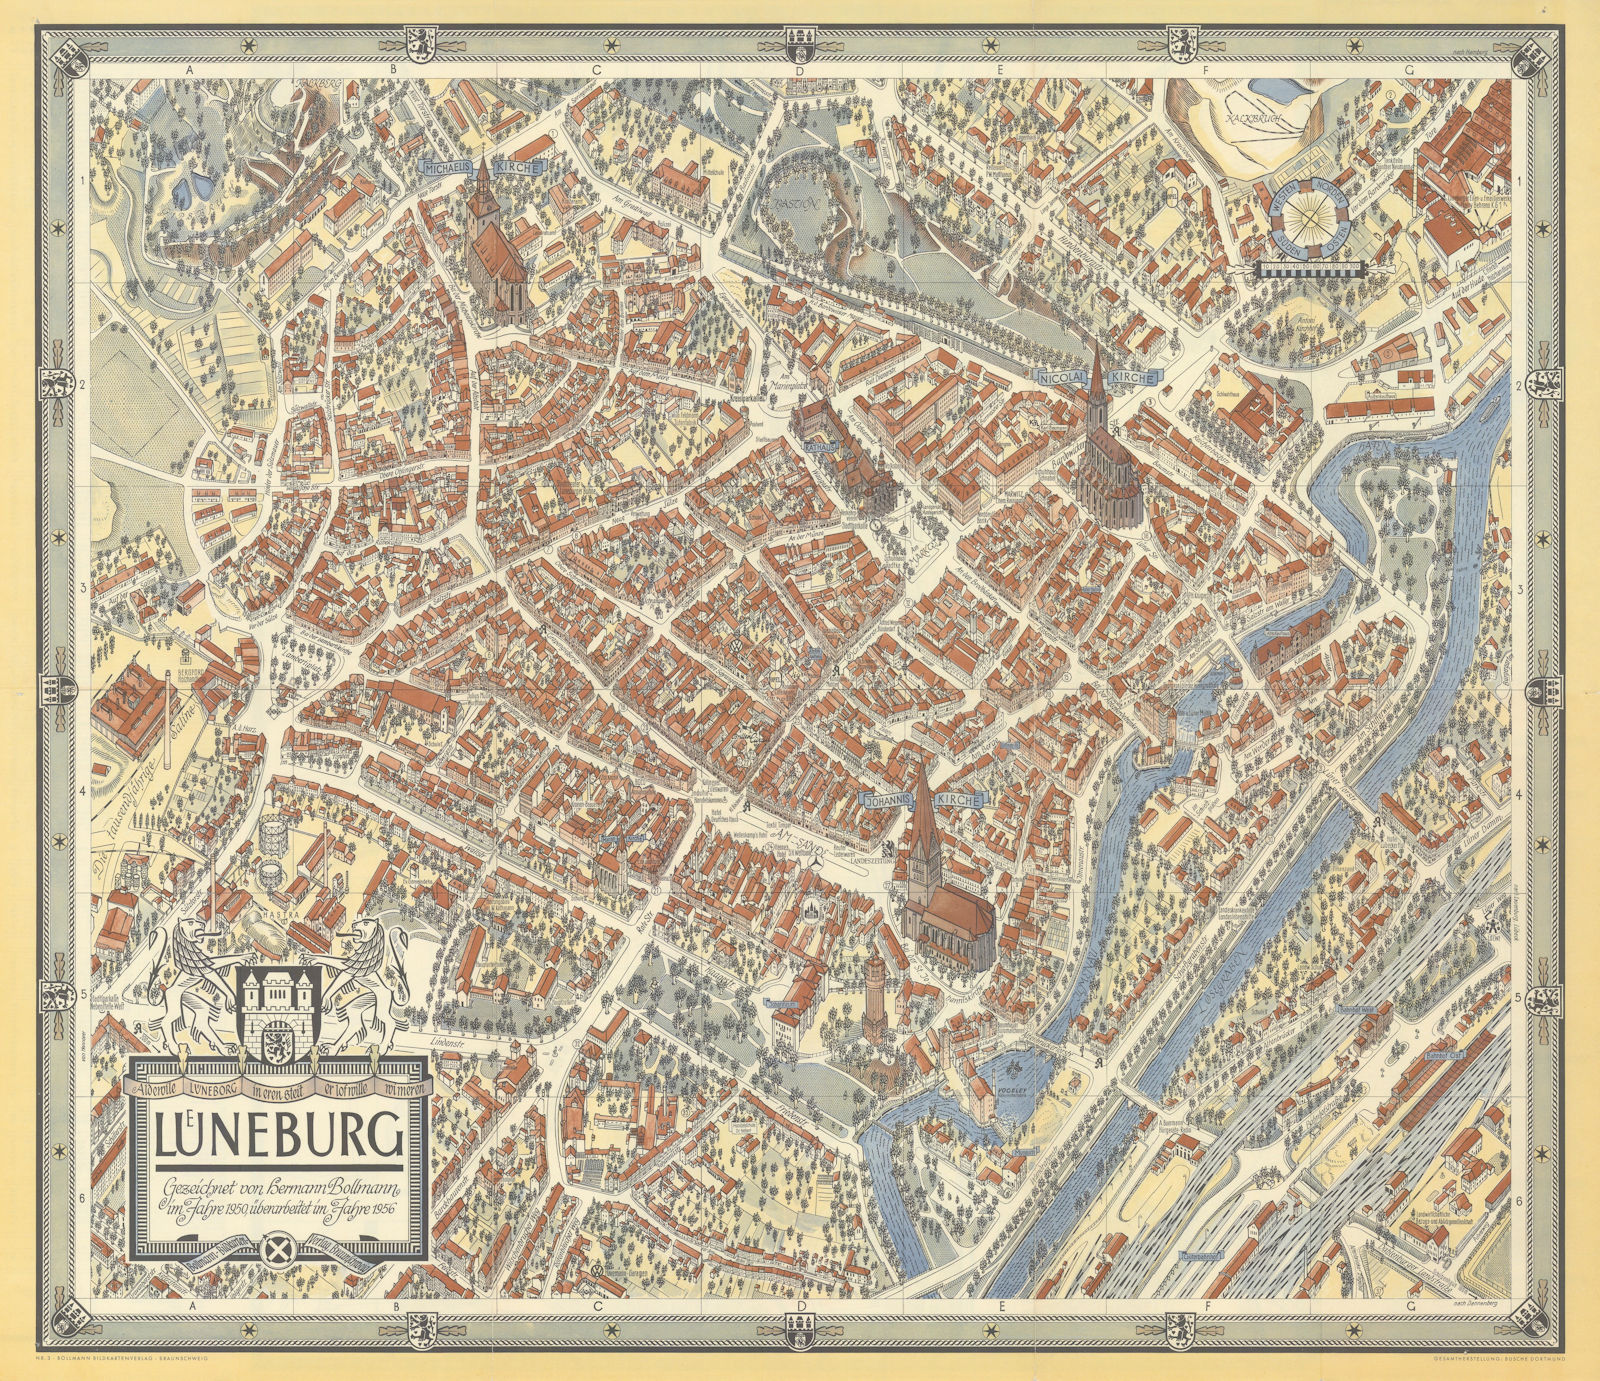 Lüneburg pictorial bird's eye view city plan #3 by Hermann Bollmann 1956 map